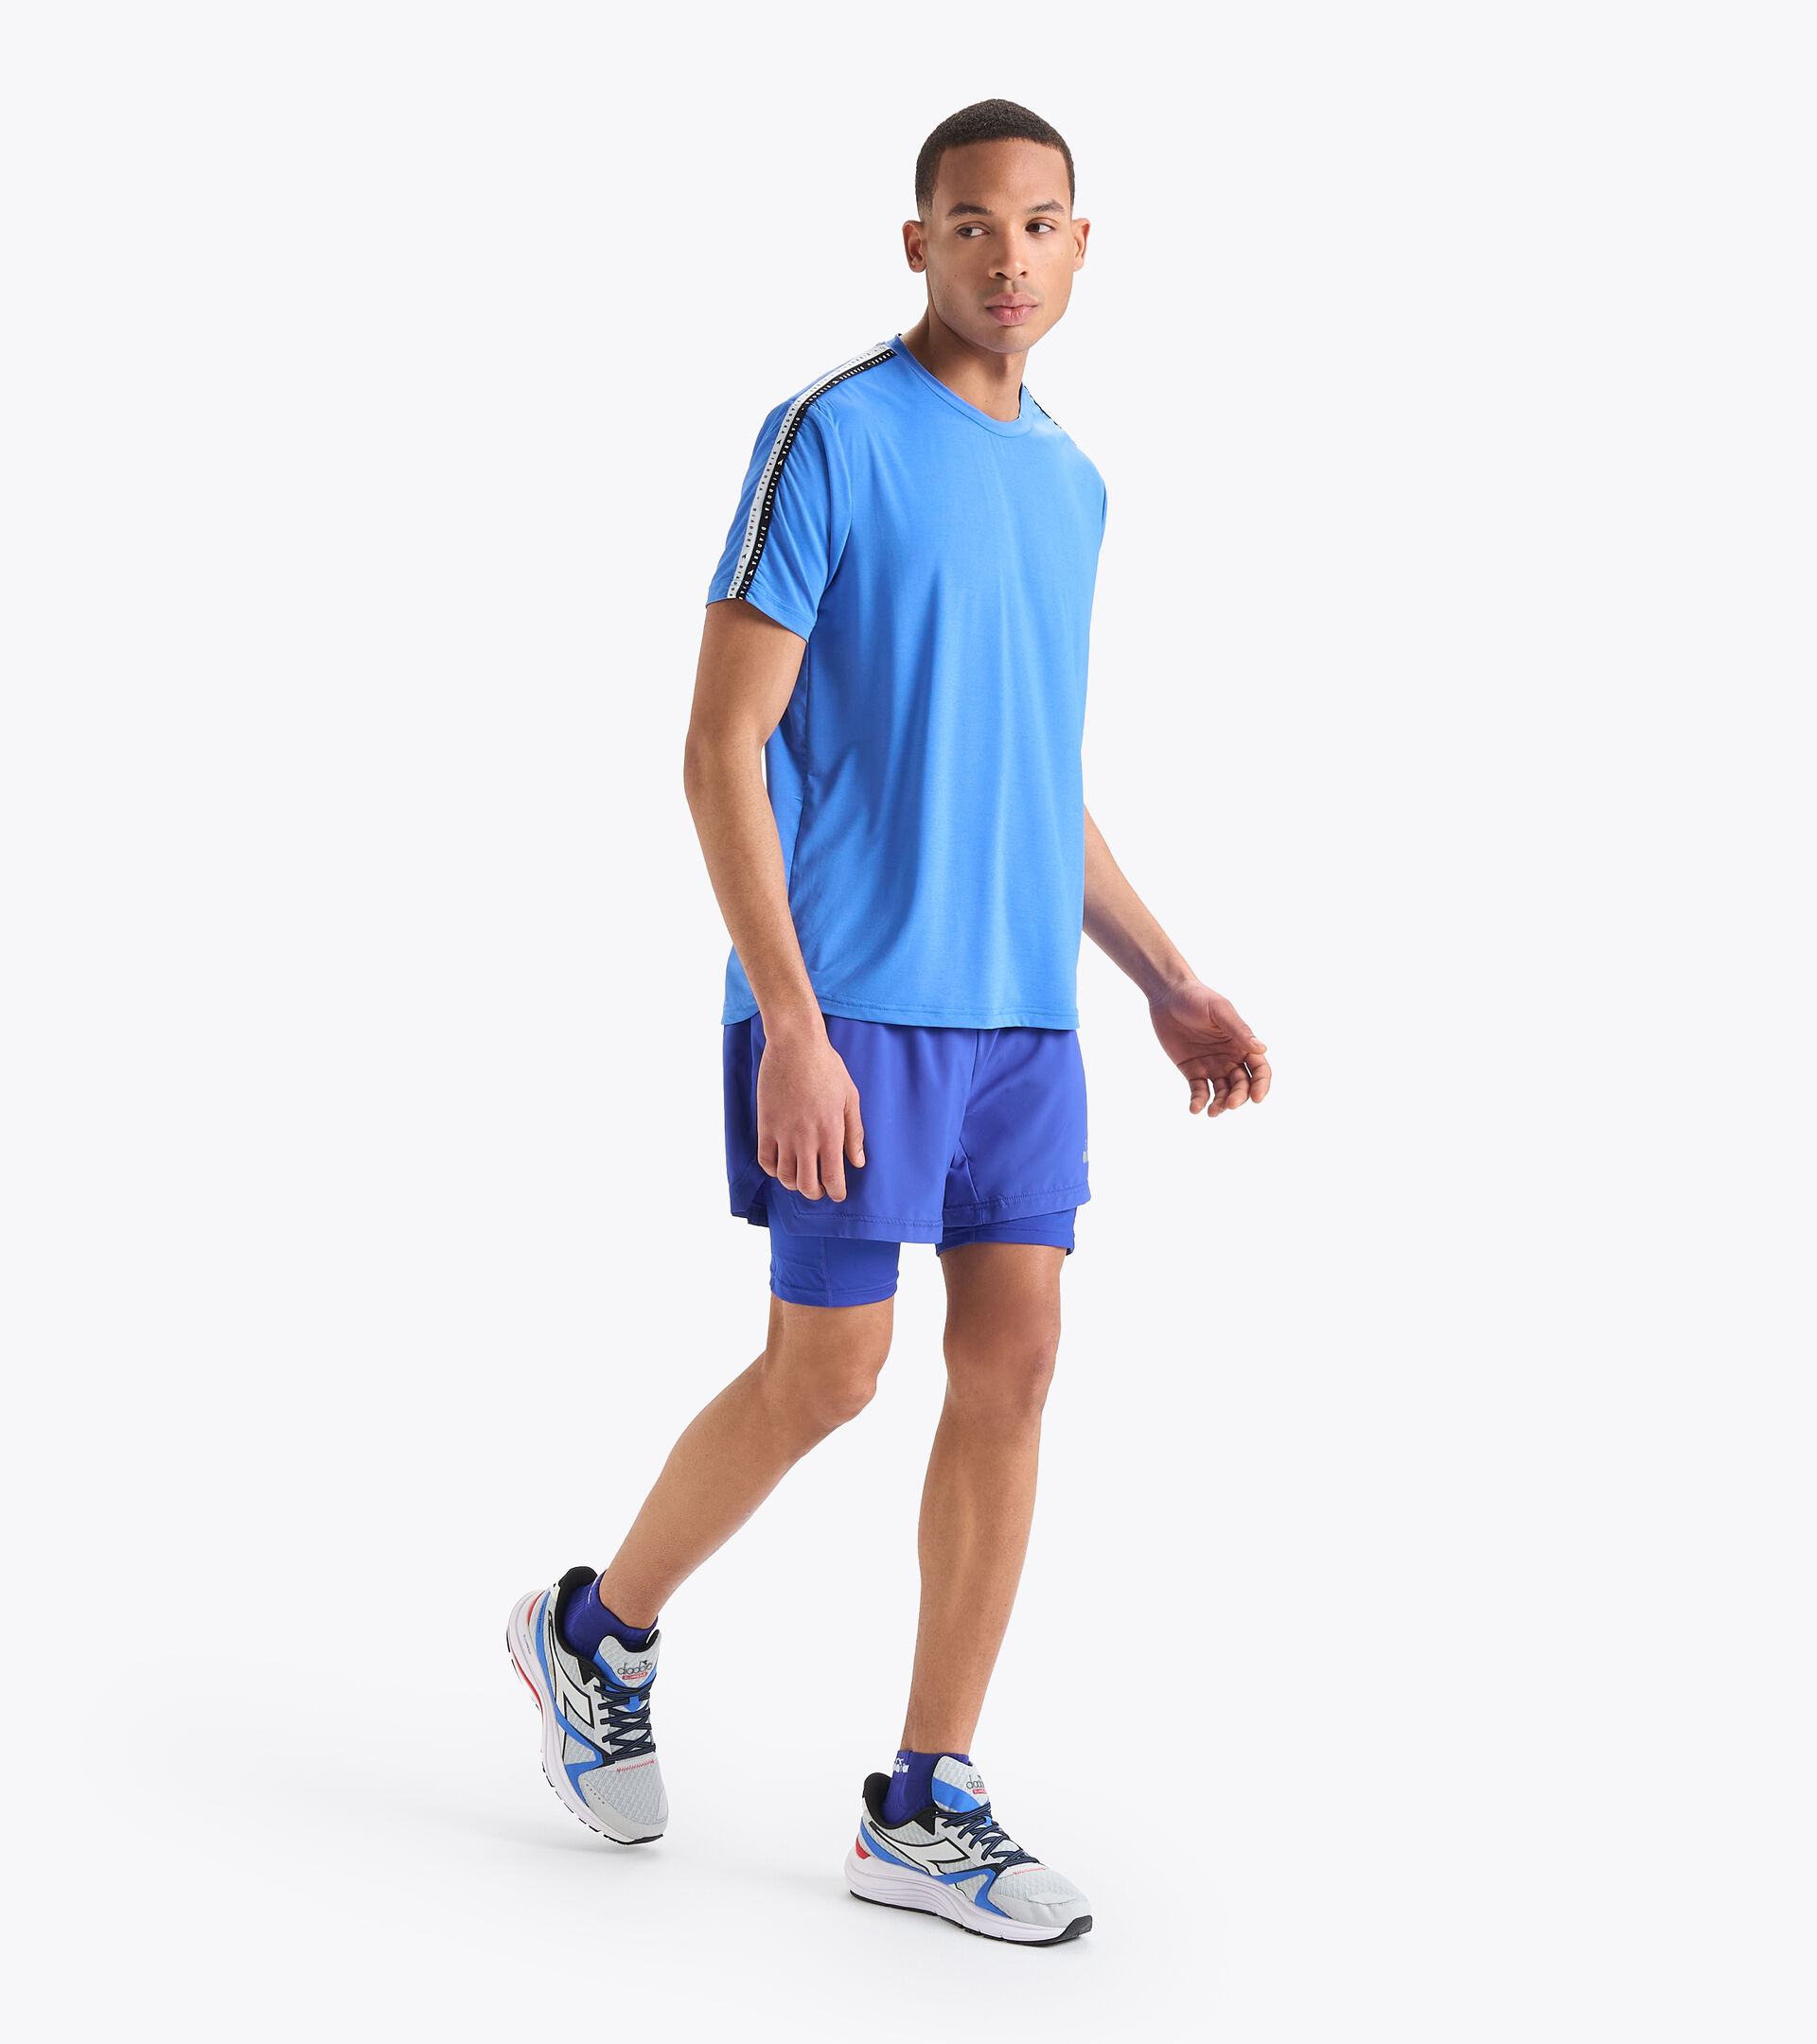 Running shorts - Men  DOUBLE LAYER BERMUDA BE ONE IMPERIAL BLUE - Diadora